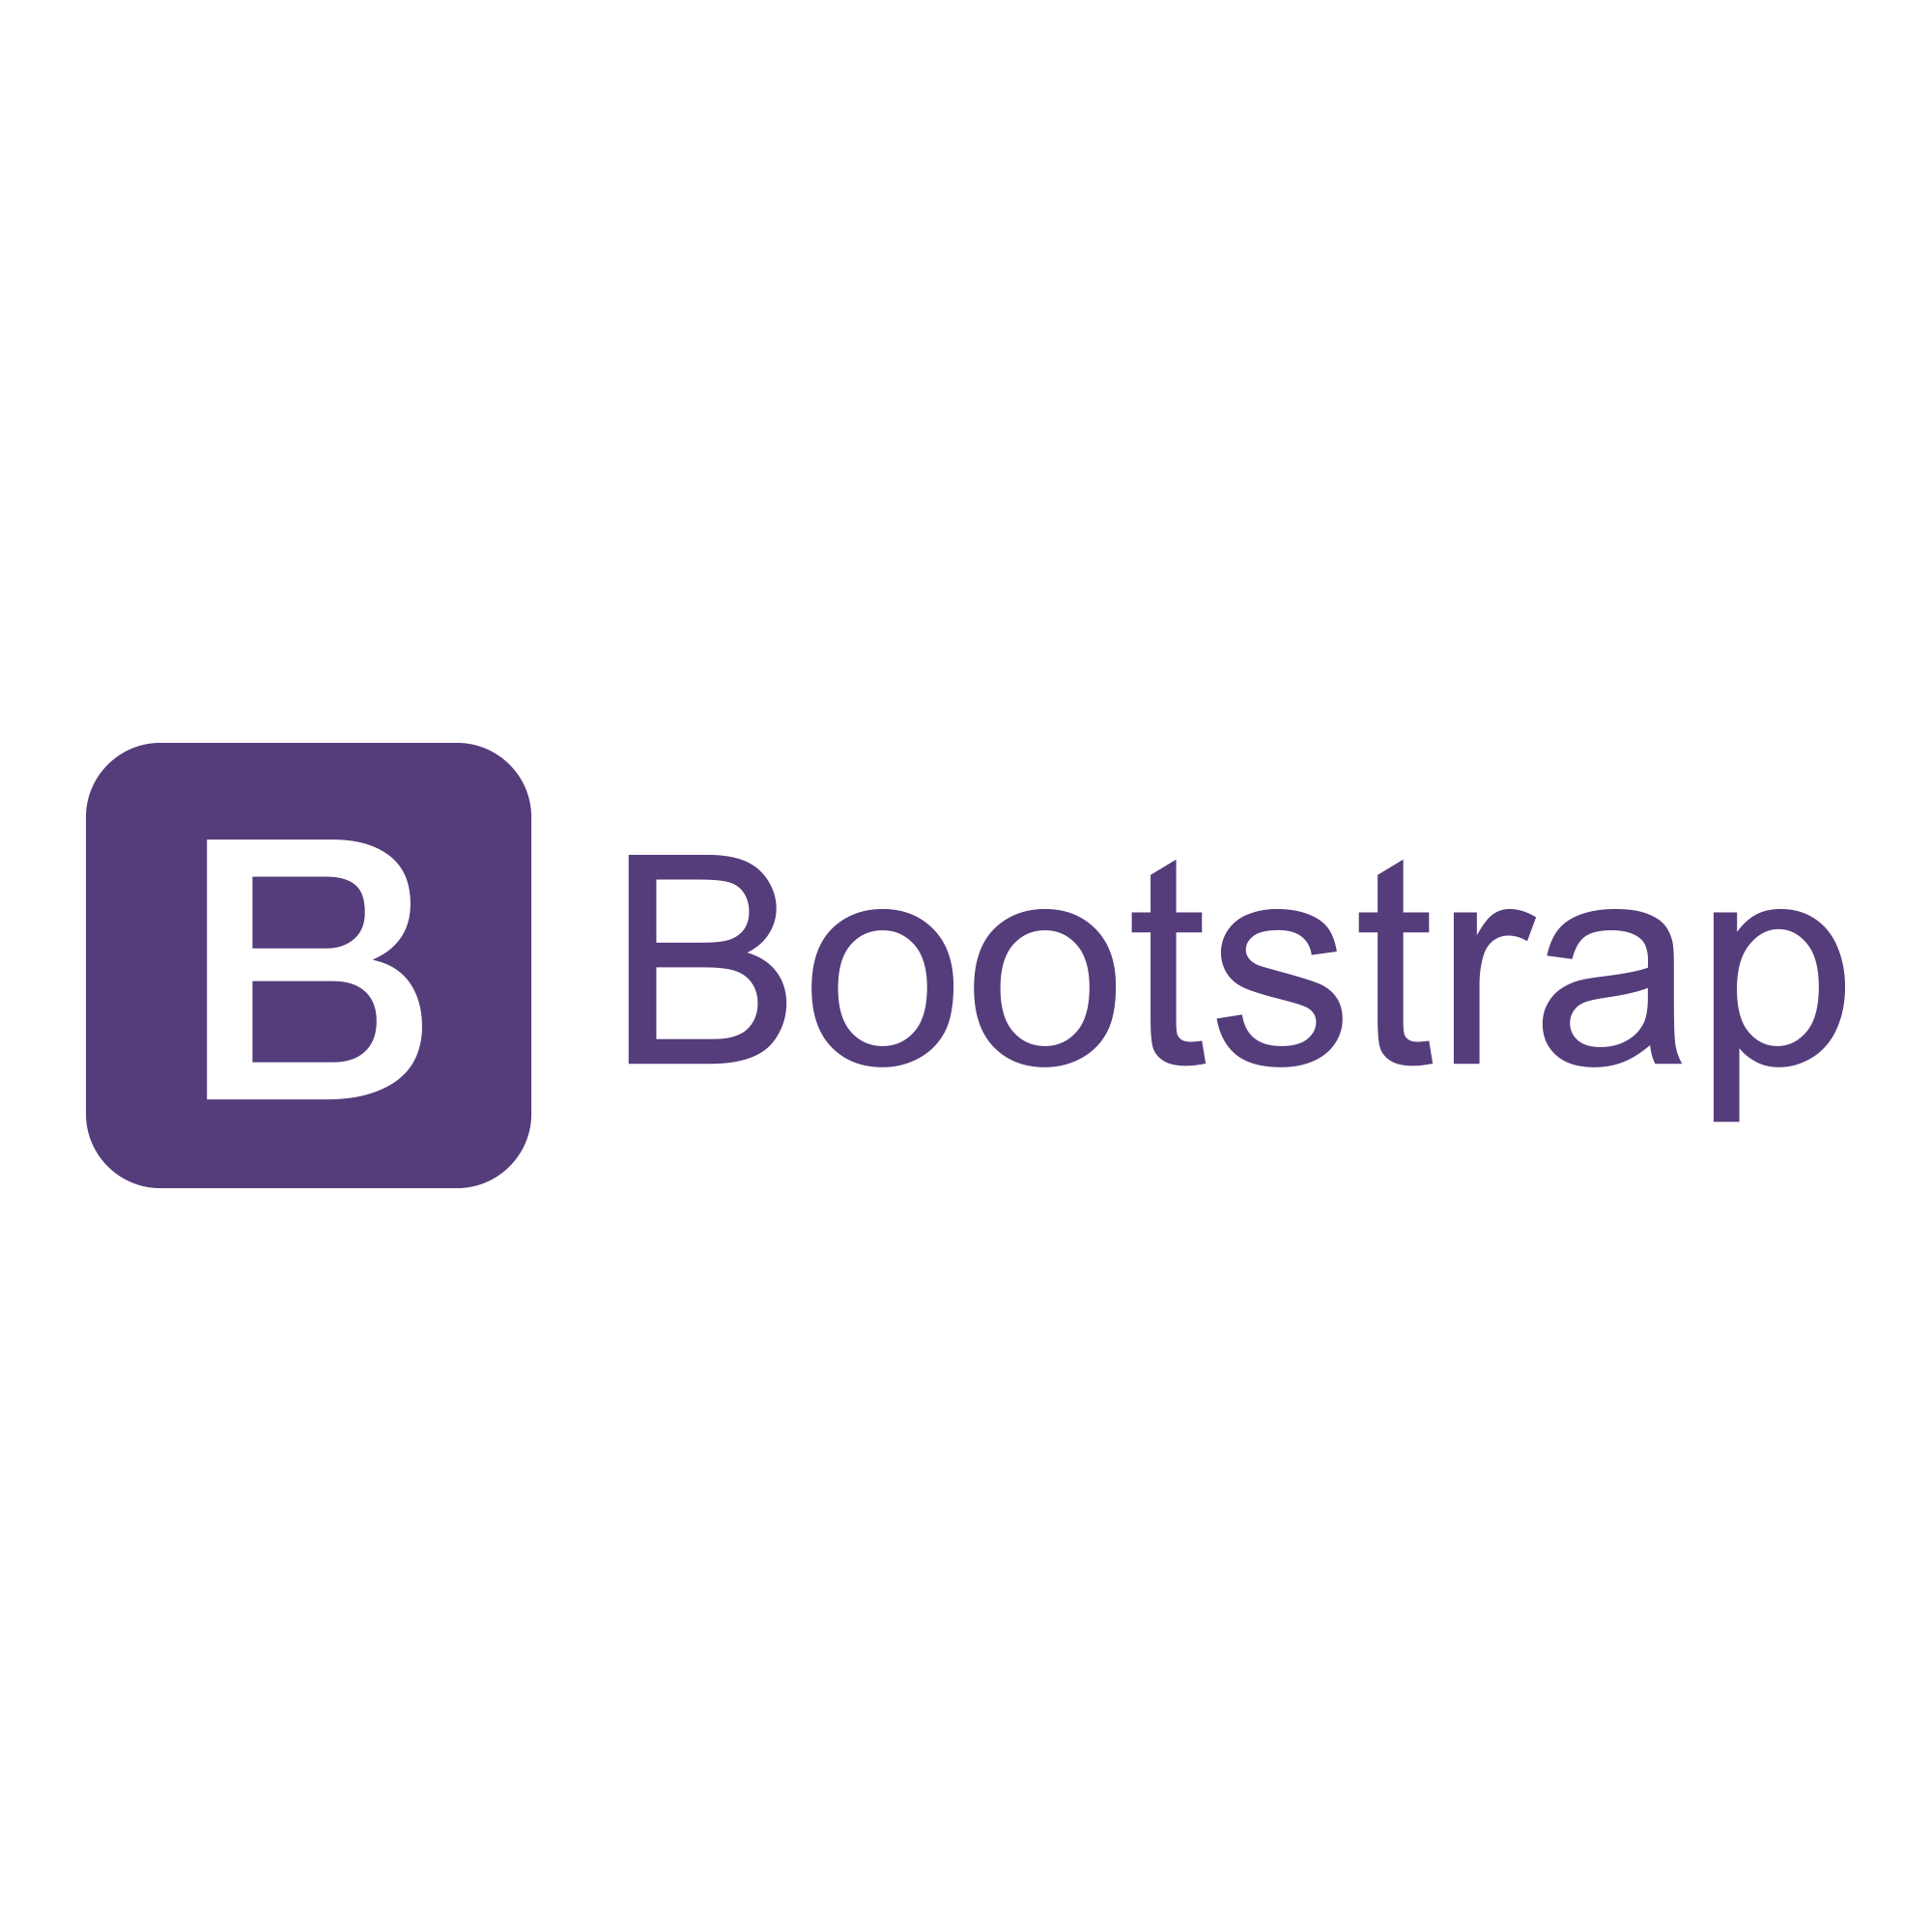 Bootstrap картинки. Bootstrap. Картинка Bootstrap. Бутстрап логотип. Логотип Bootstrap PNG.